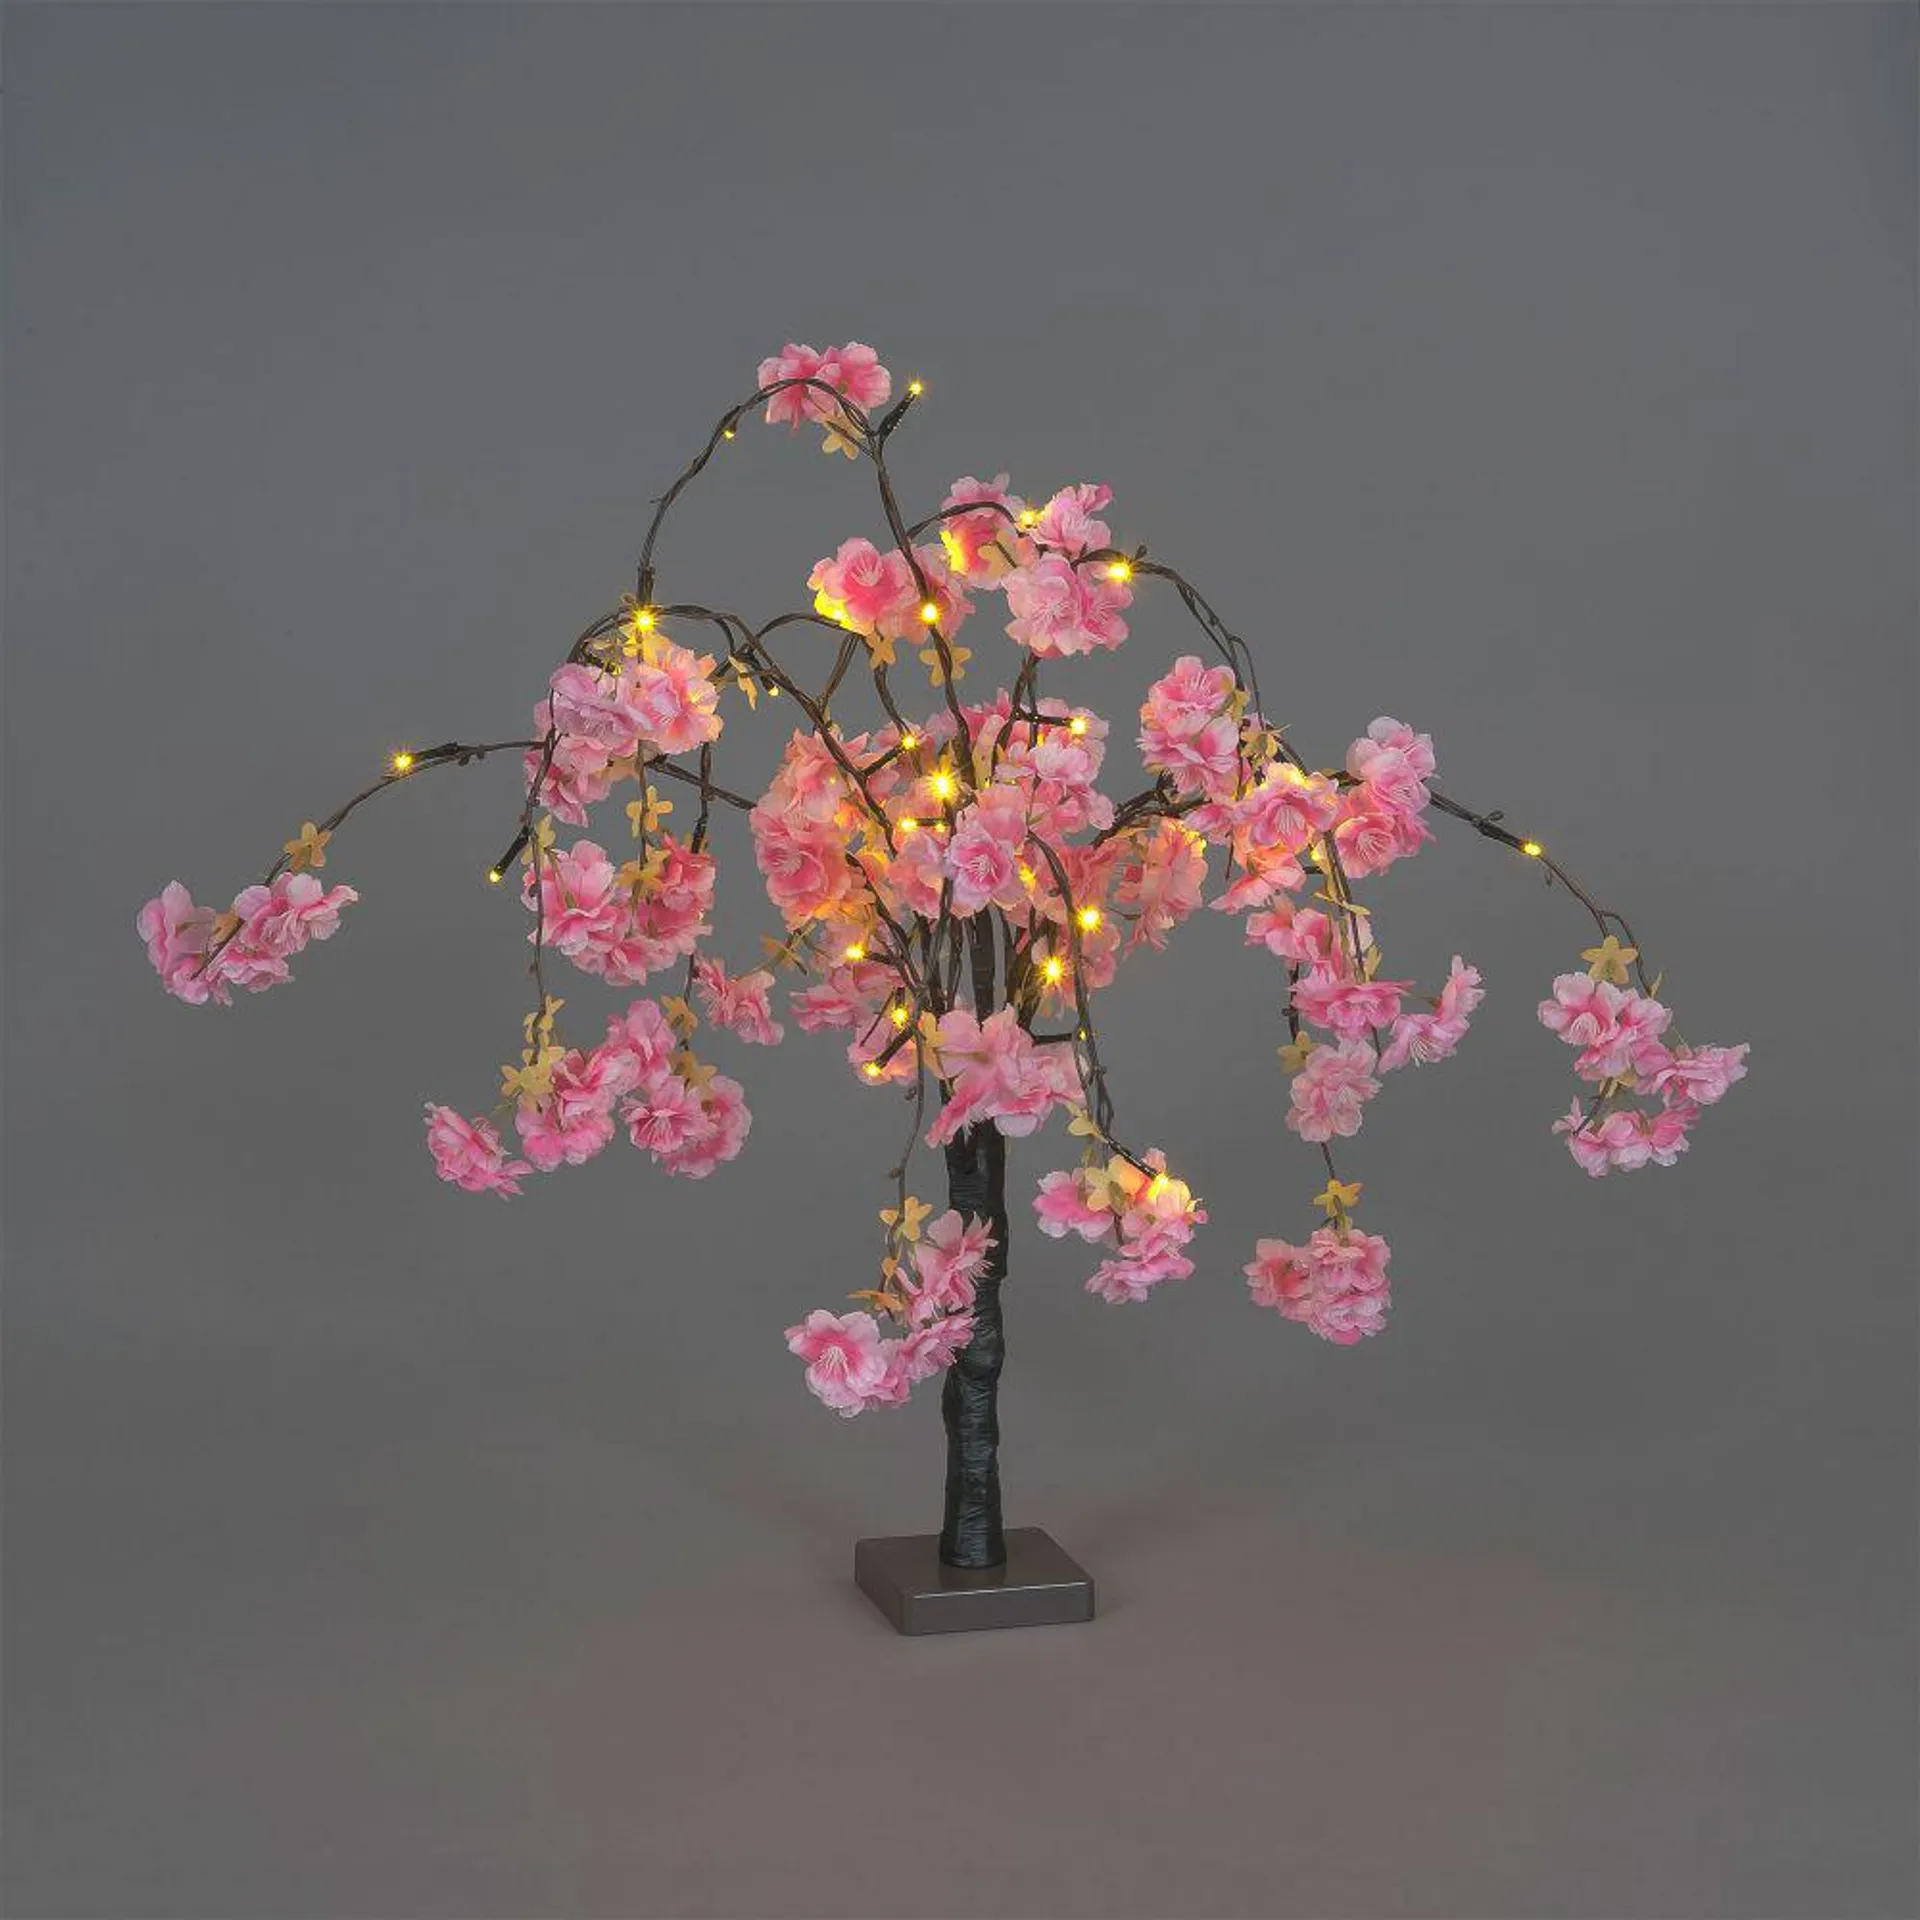 60m Cherry Blossom Tree With 48 Dark Pink Flowers